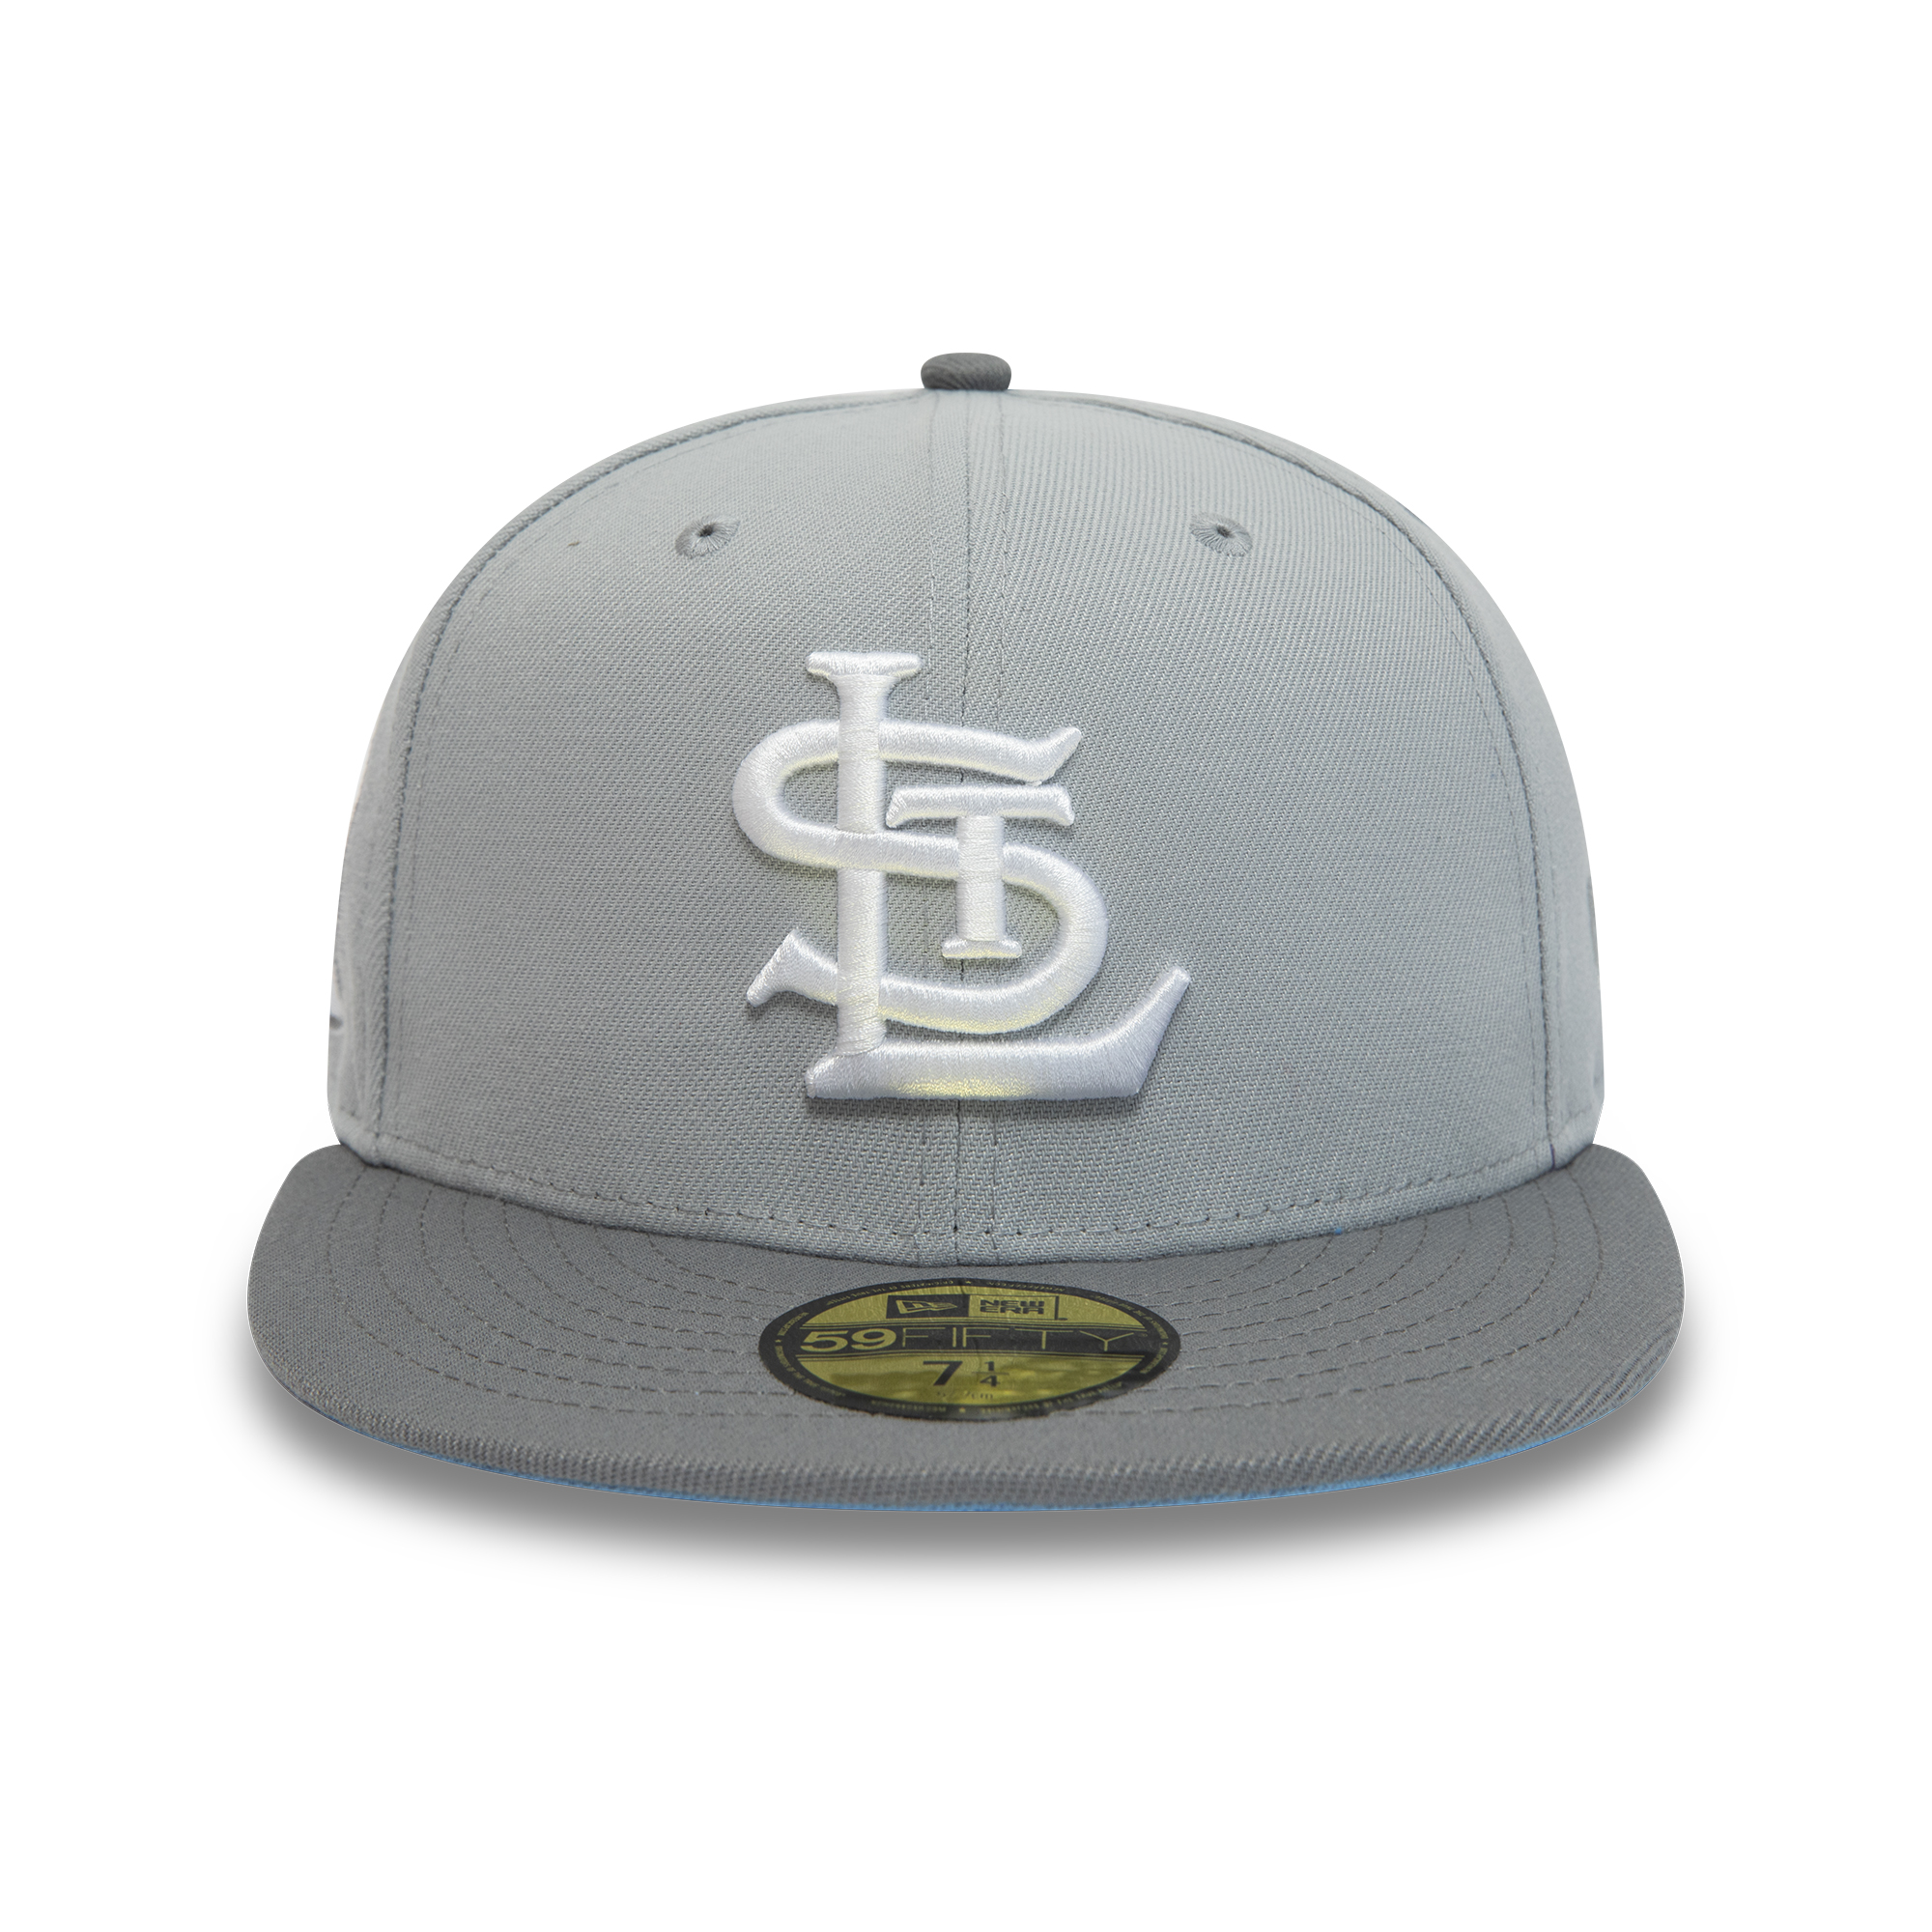 St. Louis Cardinals 1942 World Series Snapback Hat